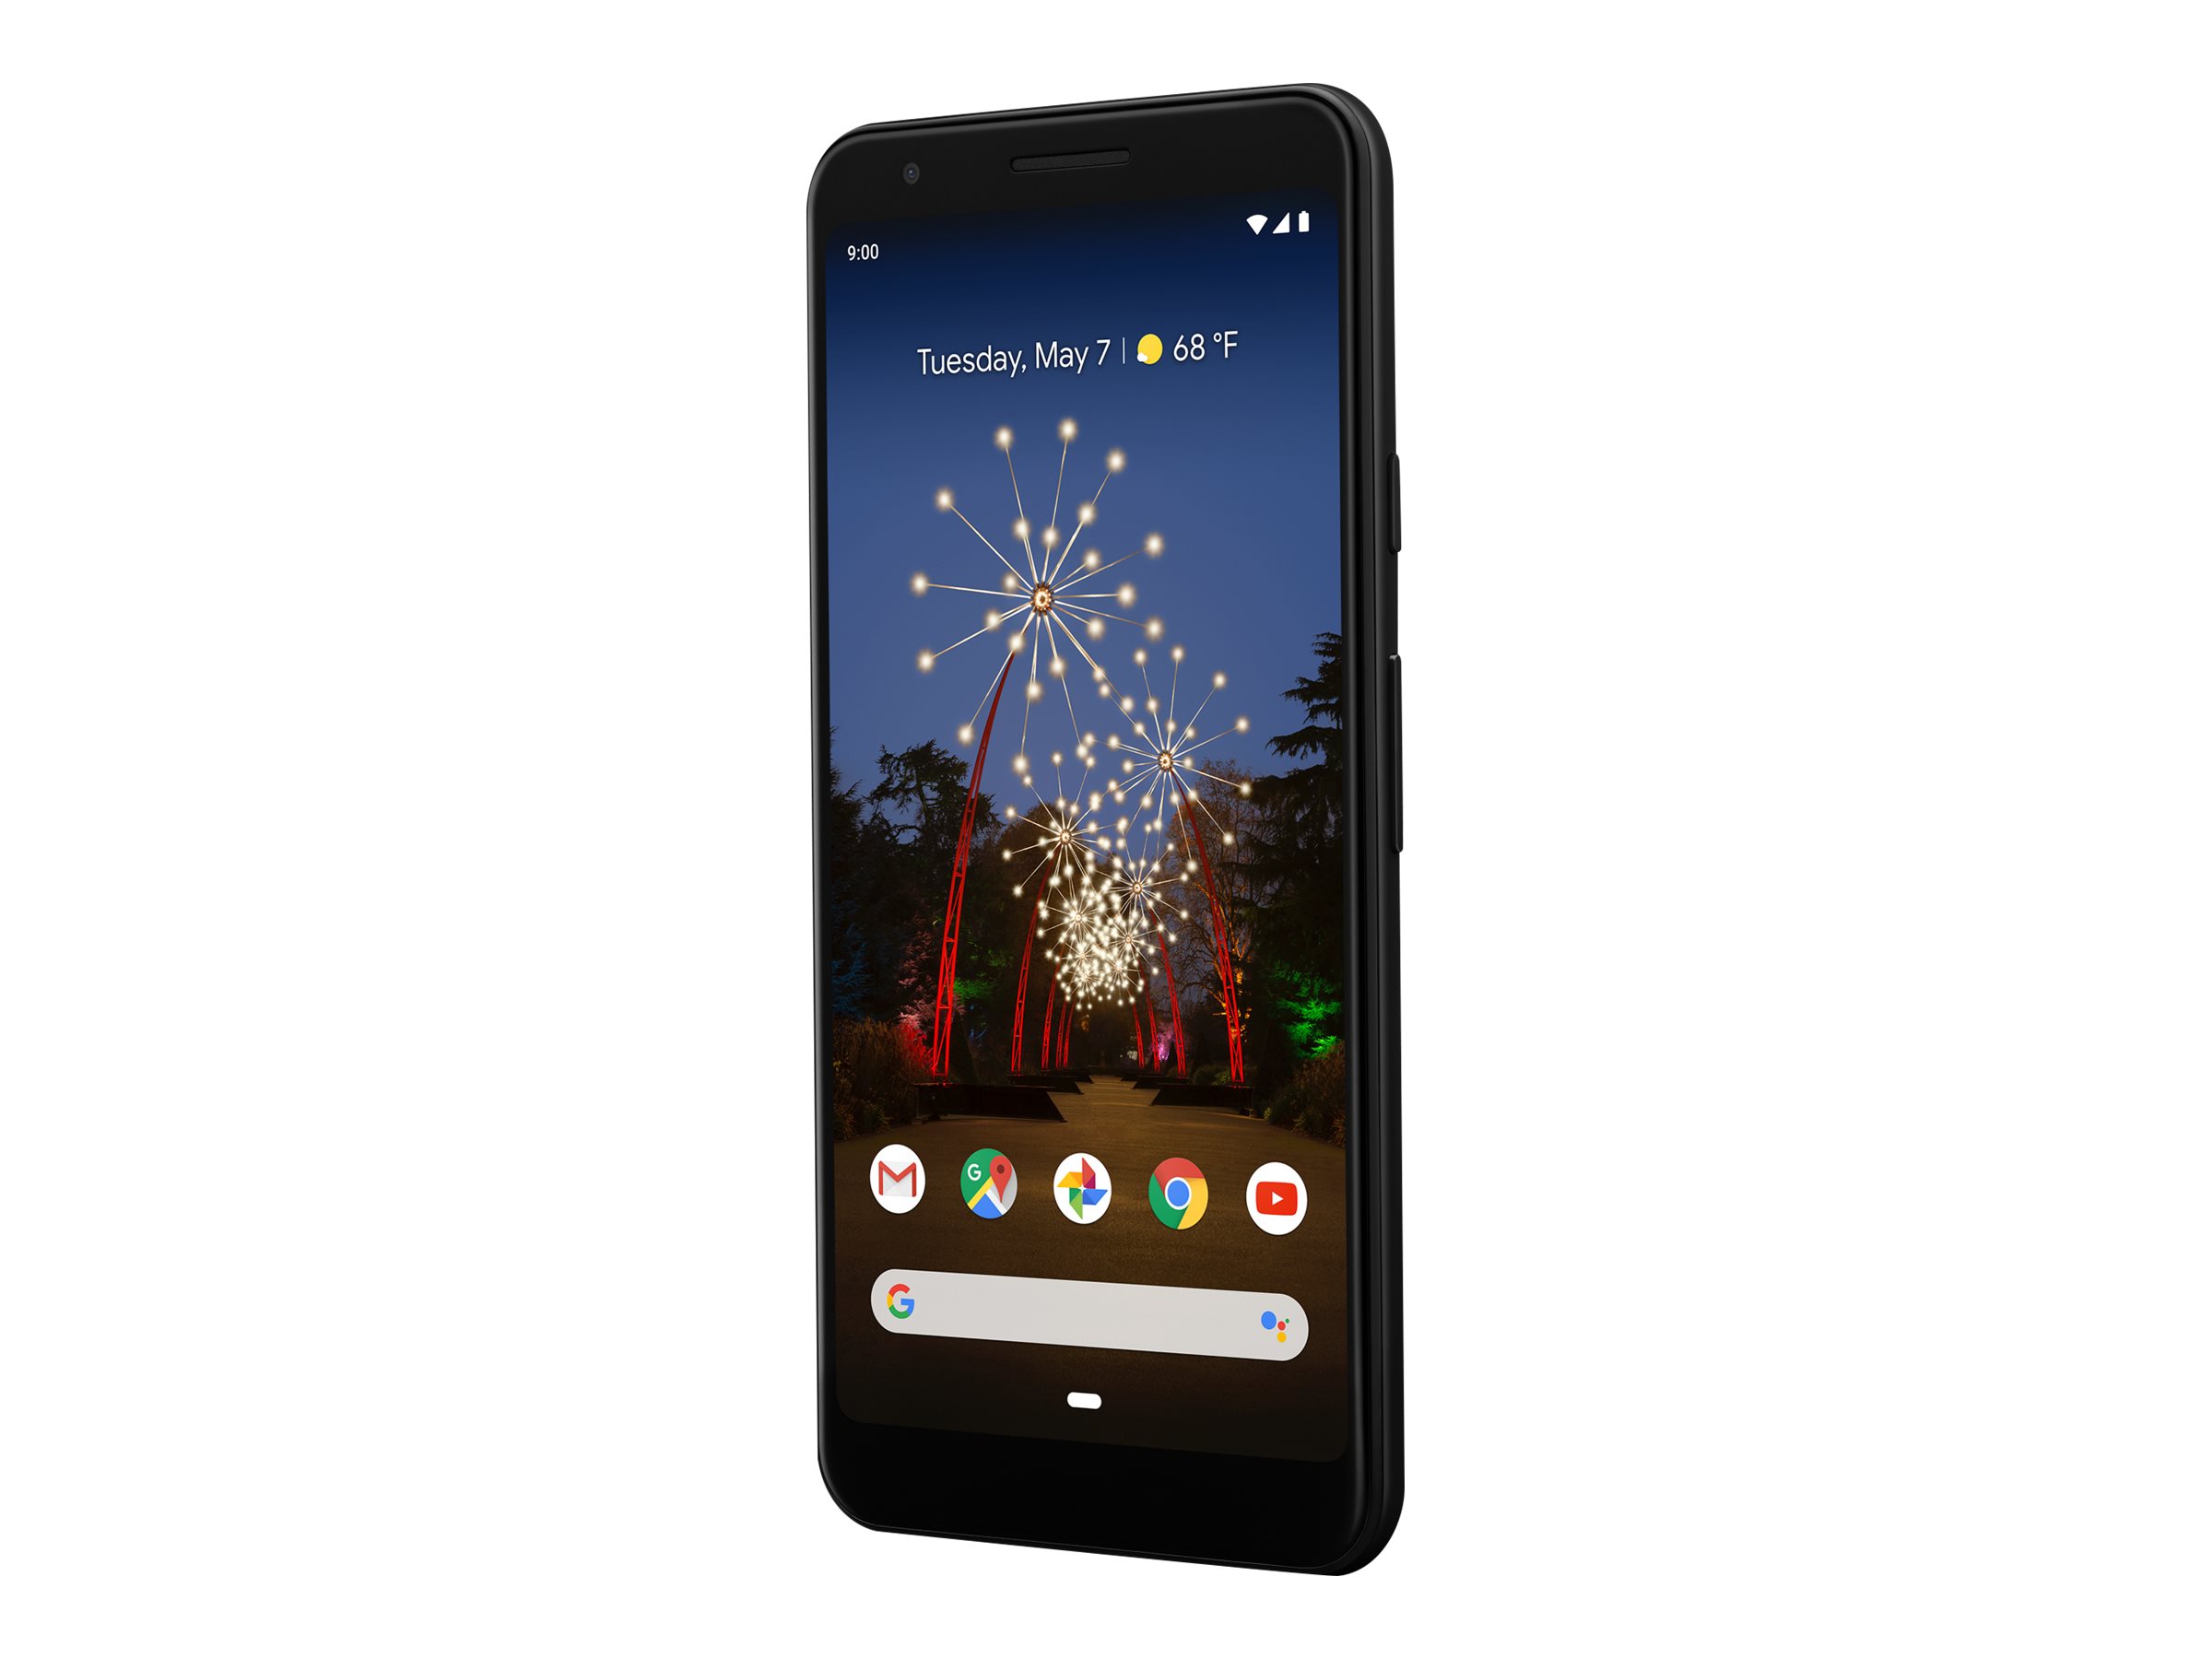 Google Pixel 3a XL - 4G smartphone - RAM 4 GB / Internal Memory 64 GB - OLED display - 6" - 2160 x 1080 pixels - rear camera 12.2 MP - front camera 8 MP - Verizon - just black - image 1 of 4